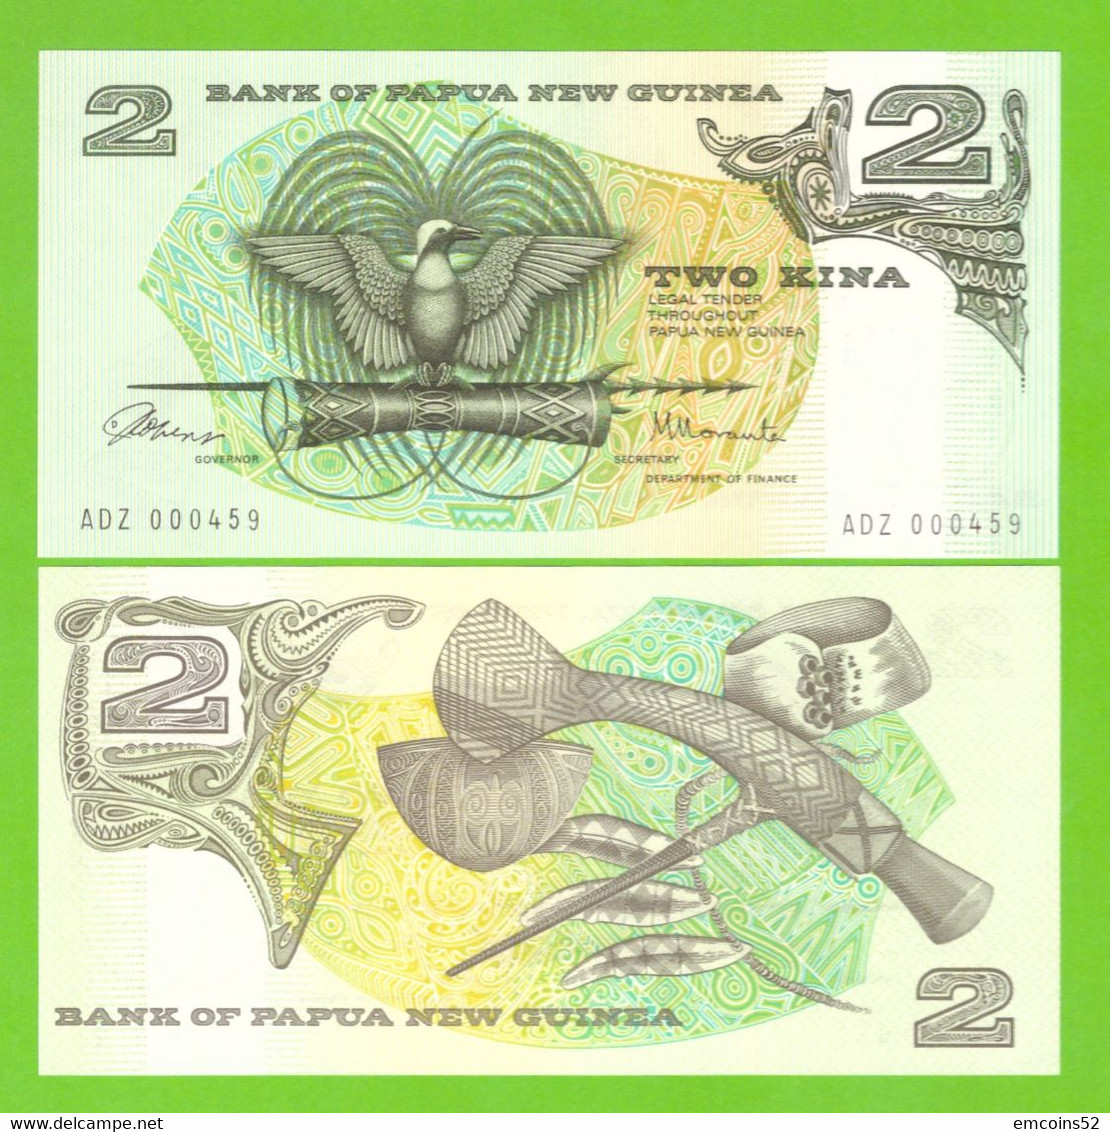 PAPUA NEW GUINEA 2 DOLLARS 1981/1987  P-5a  UNC - Papua-Neuguinea